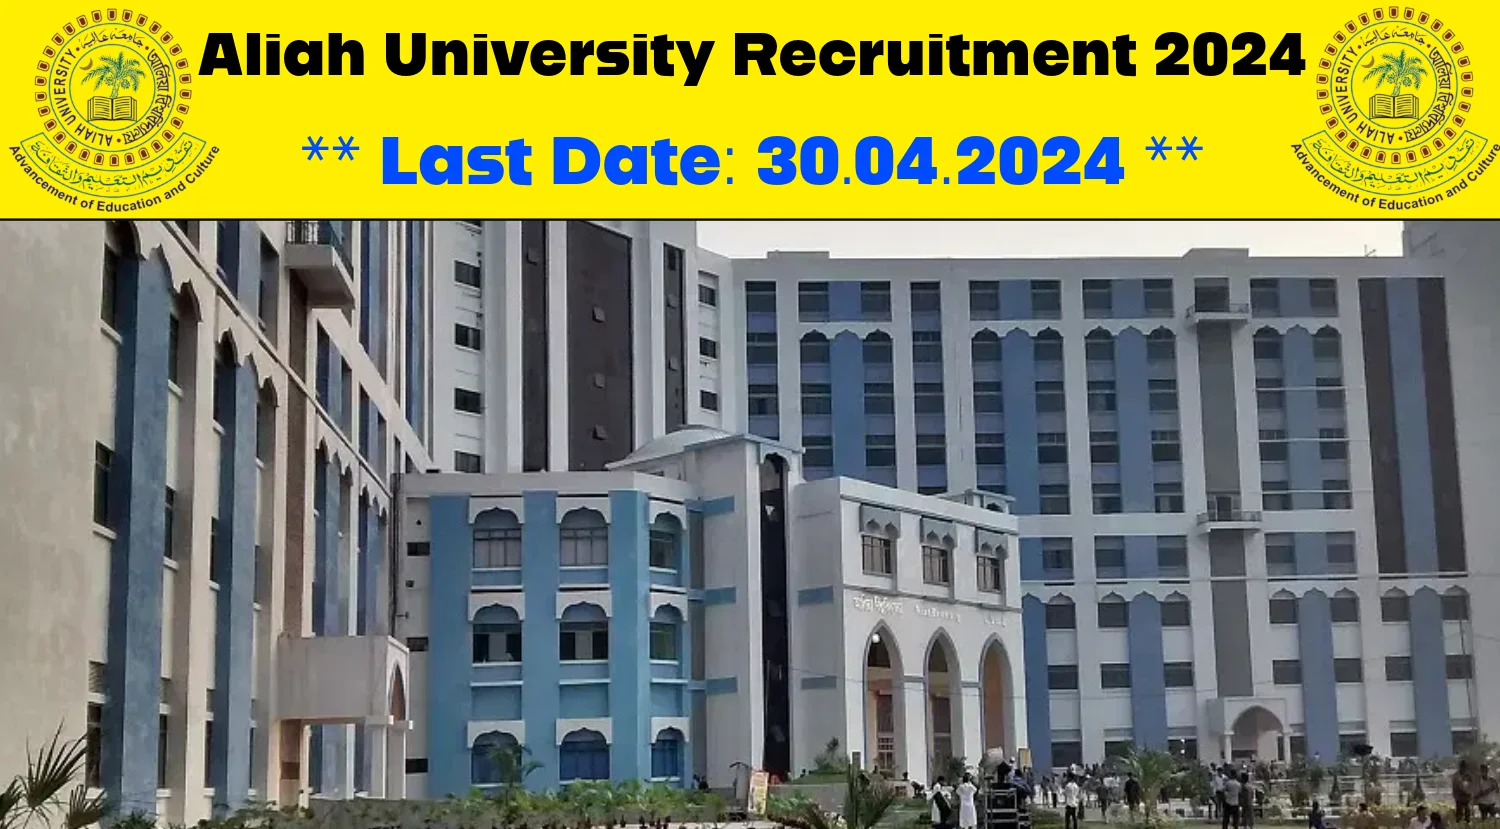 Aliah University Recruitment 2024